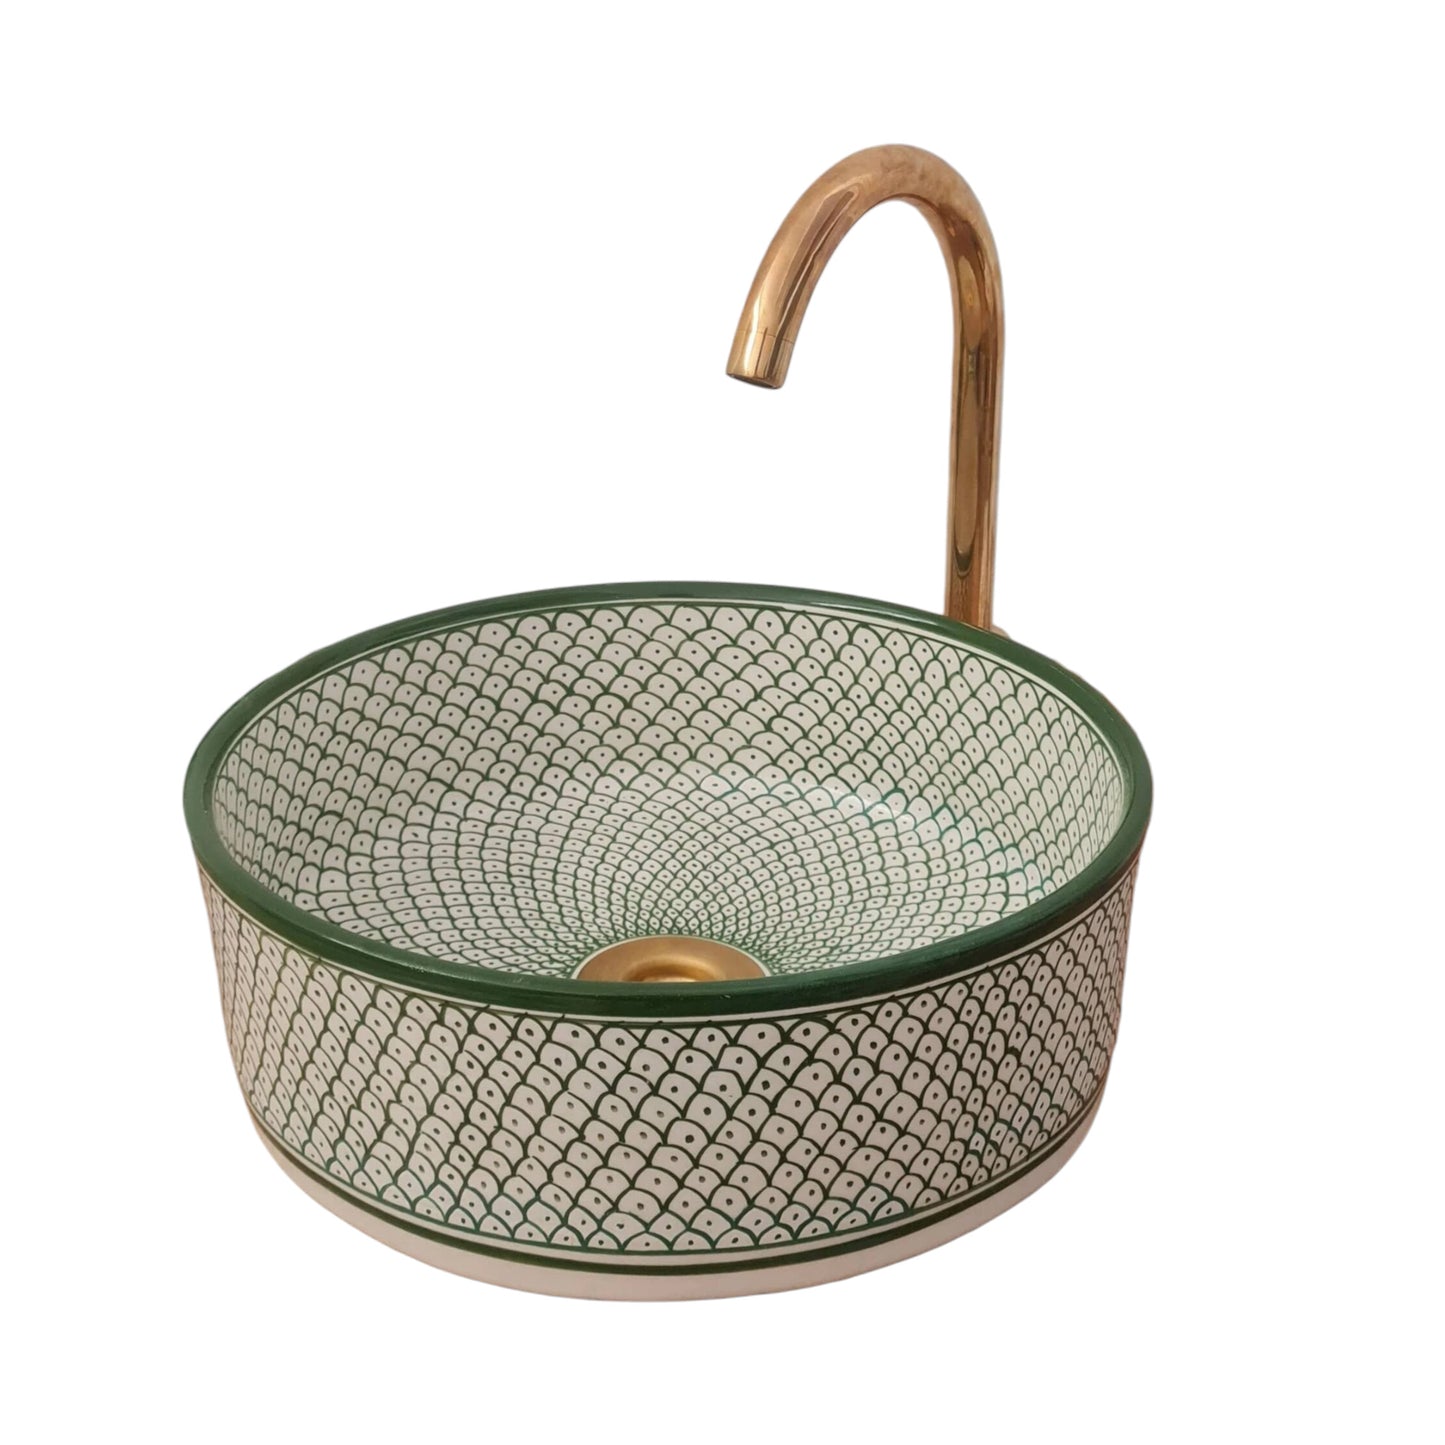 Moroccan sink | moroccan ceramic sink | bathroom sink | moroccan bathroom basin | moroccan sink bowl | Green sink bowl #32